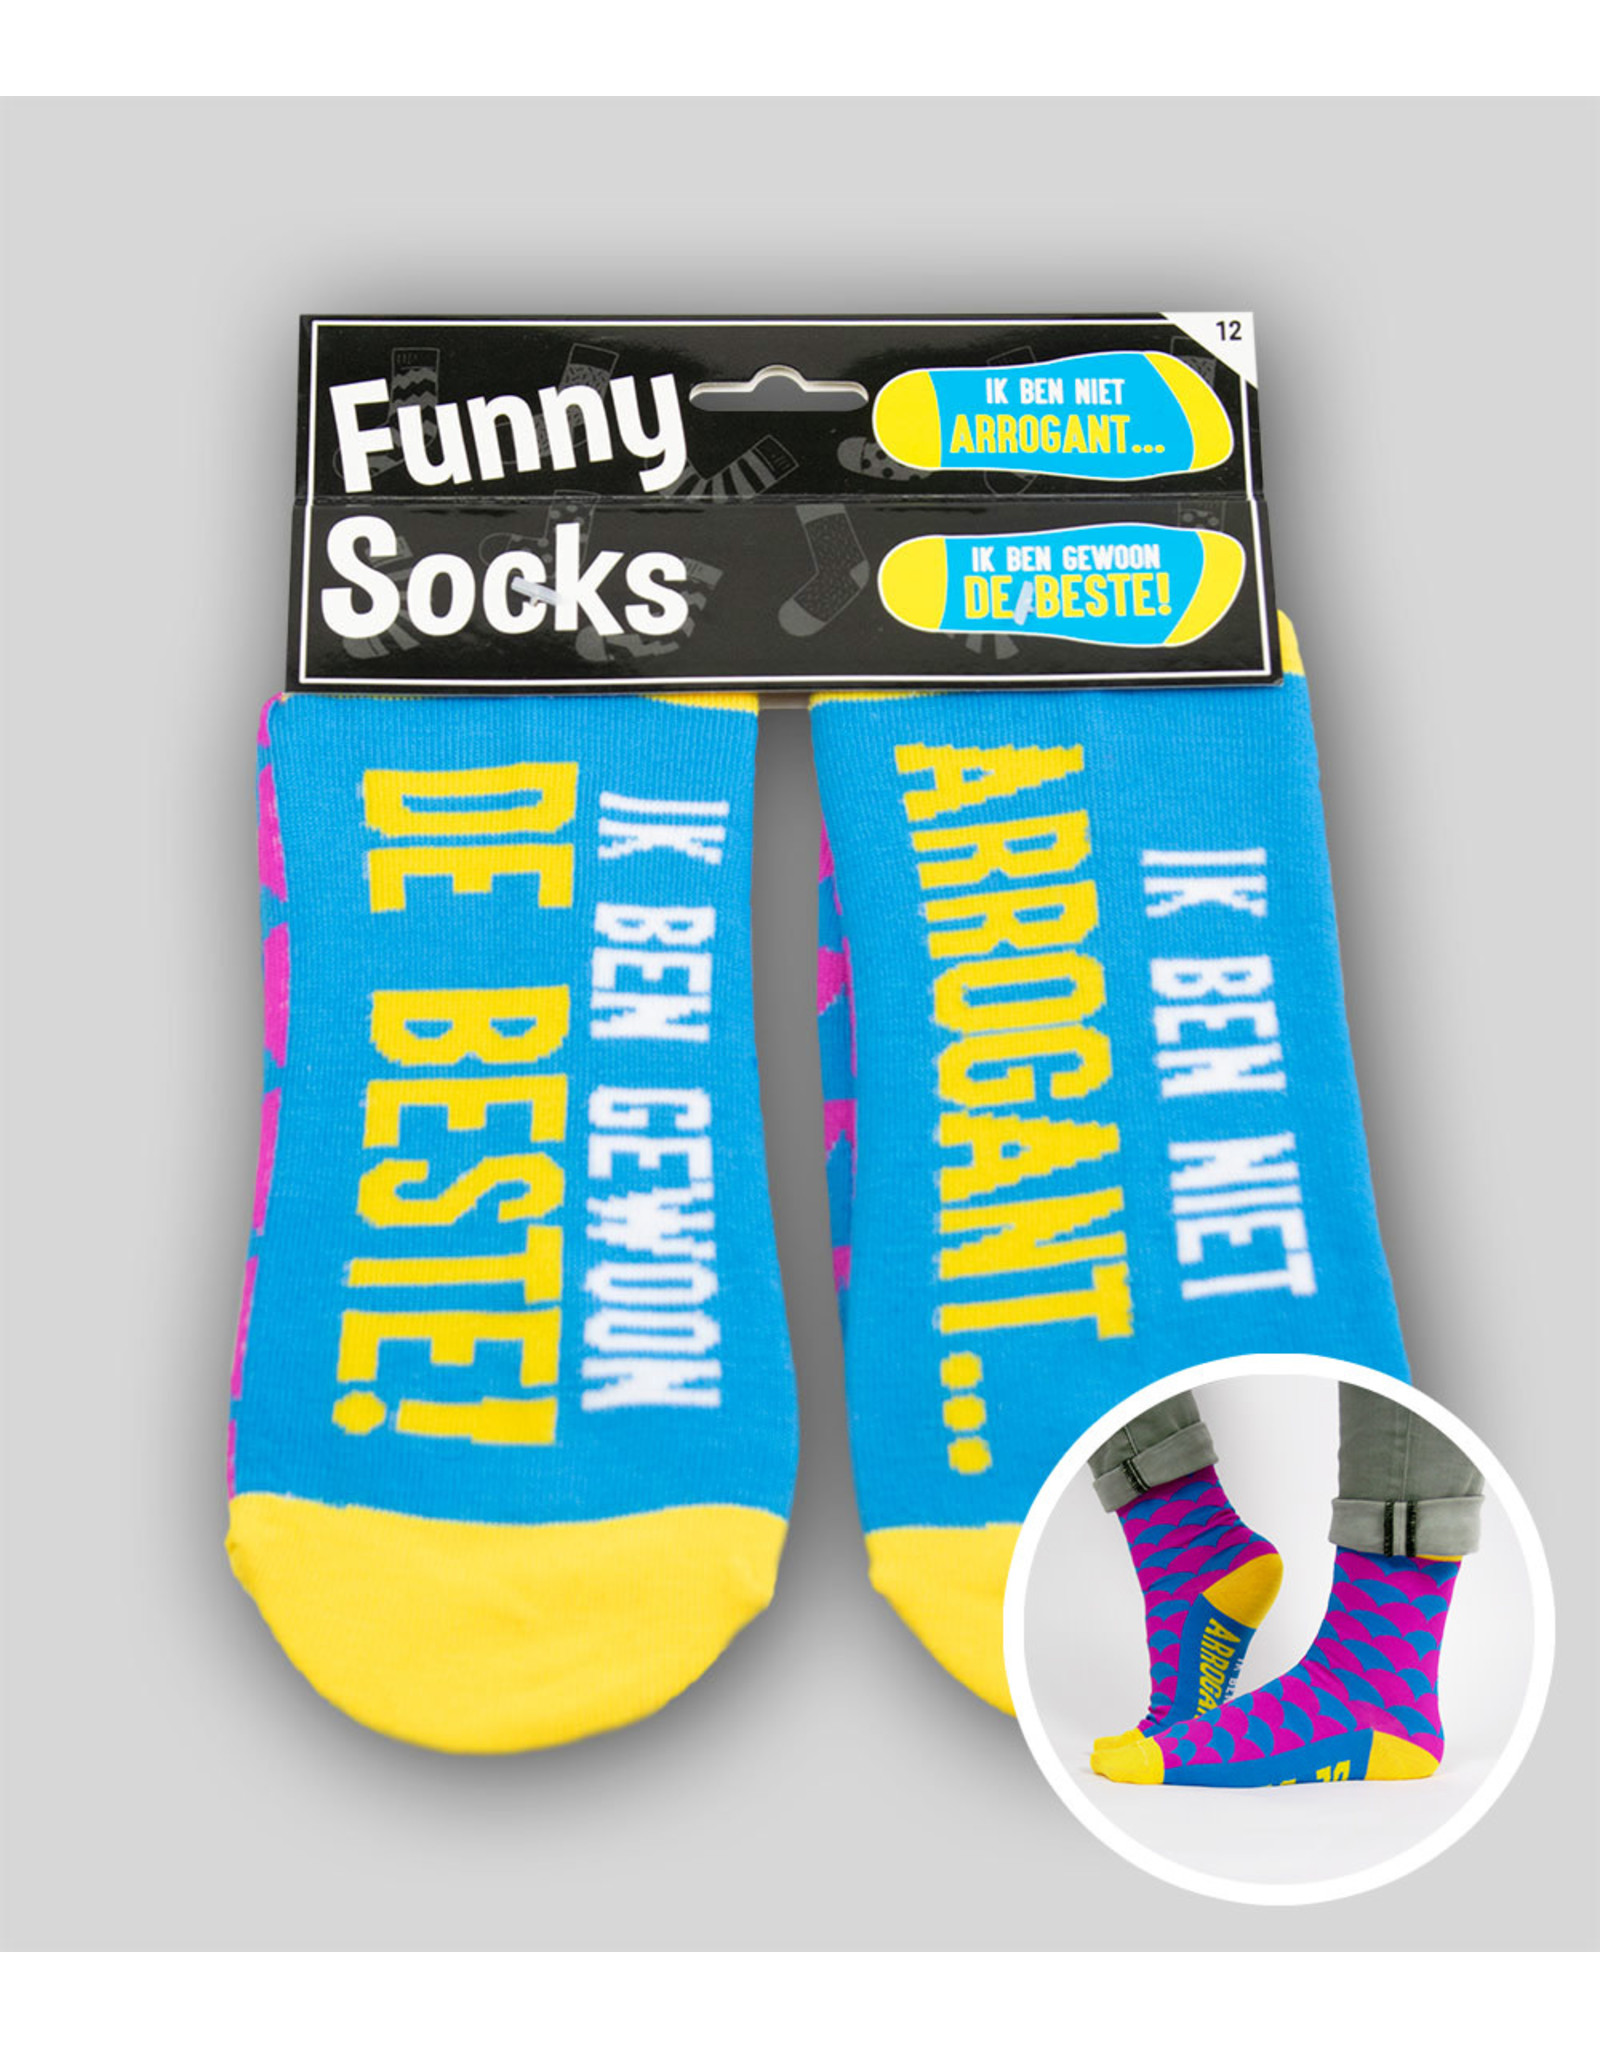 Funny socks Arrogant